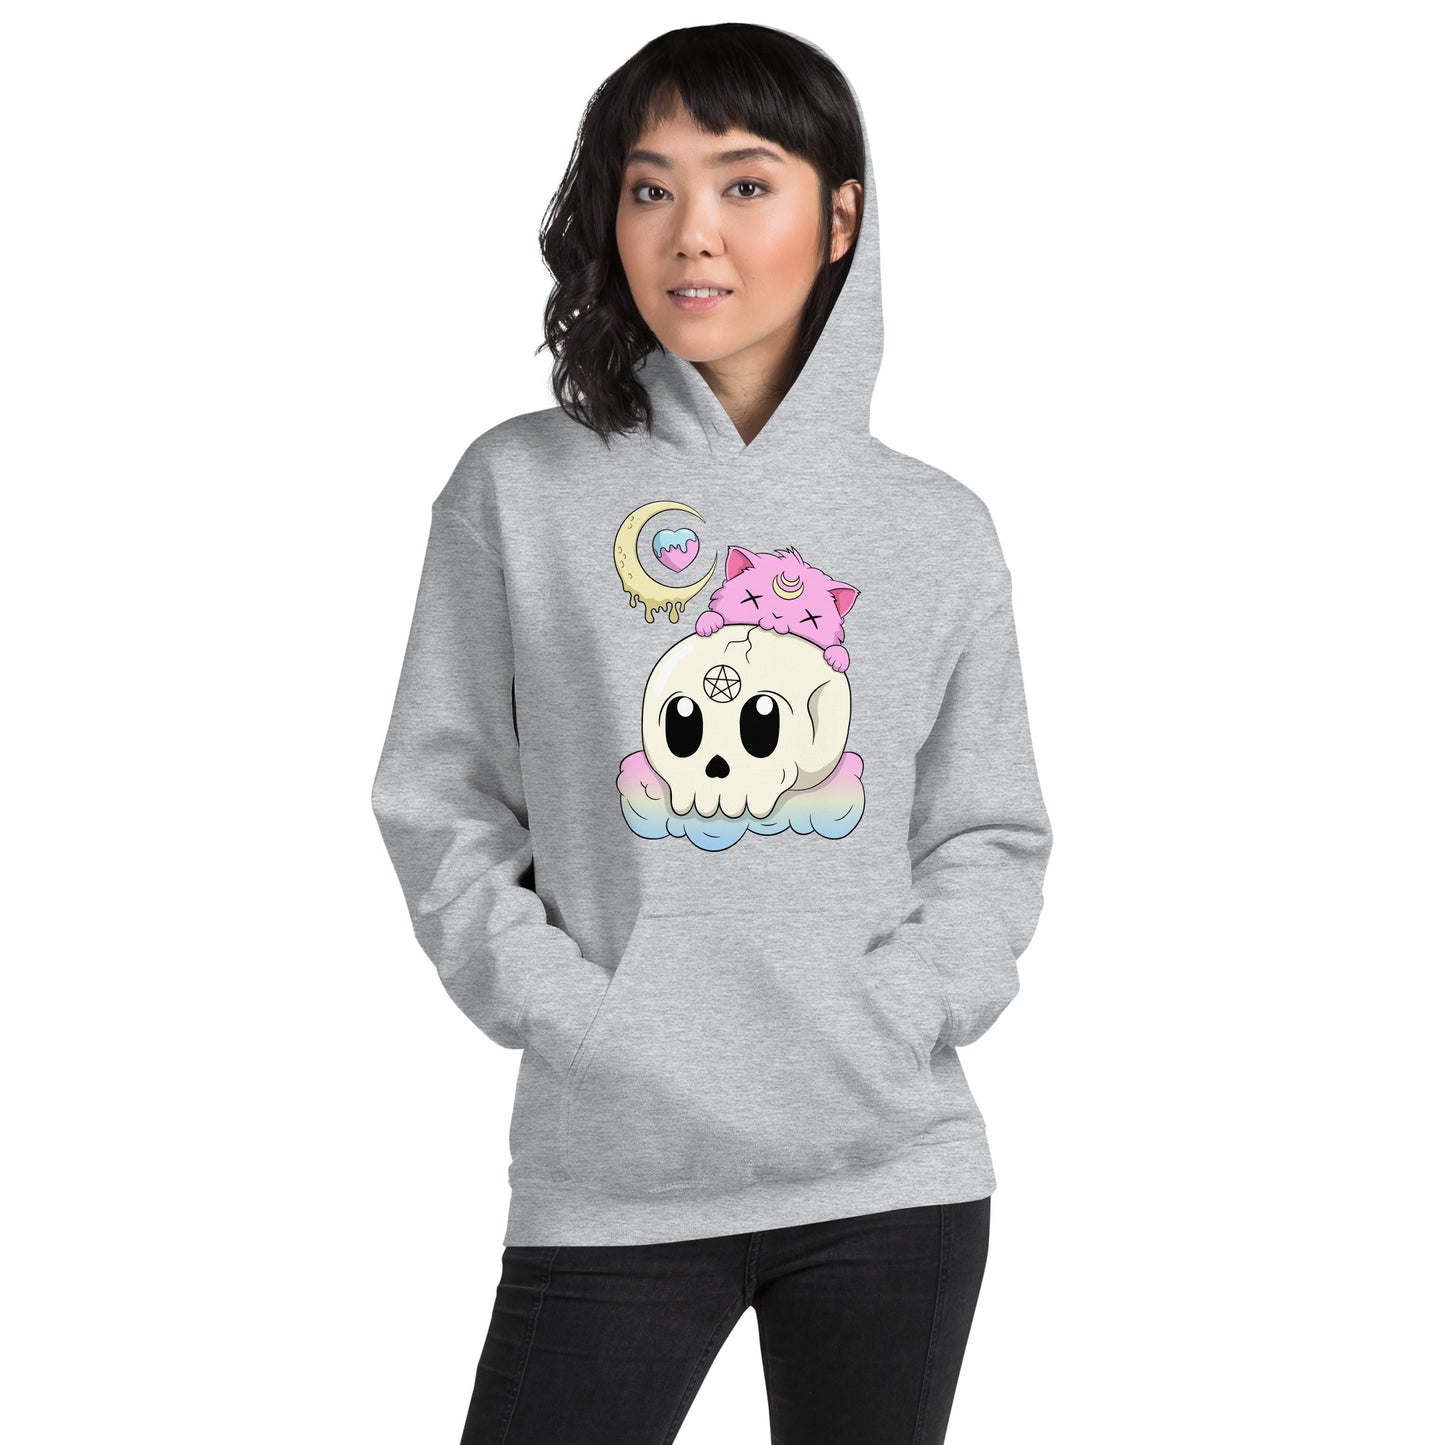 Creepy Kawaii Unisex Hoodie - Gothic Cat Sweatshirt